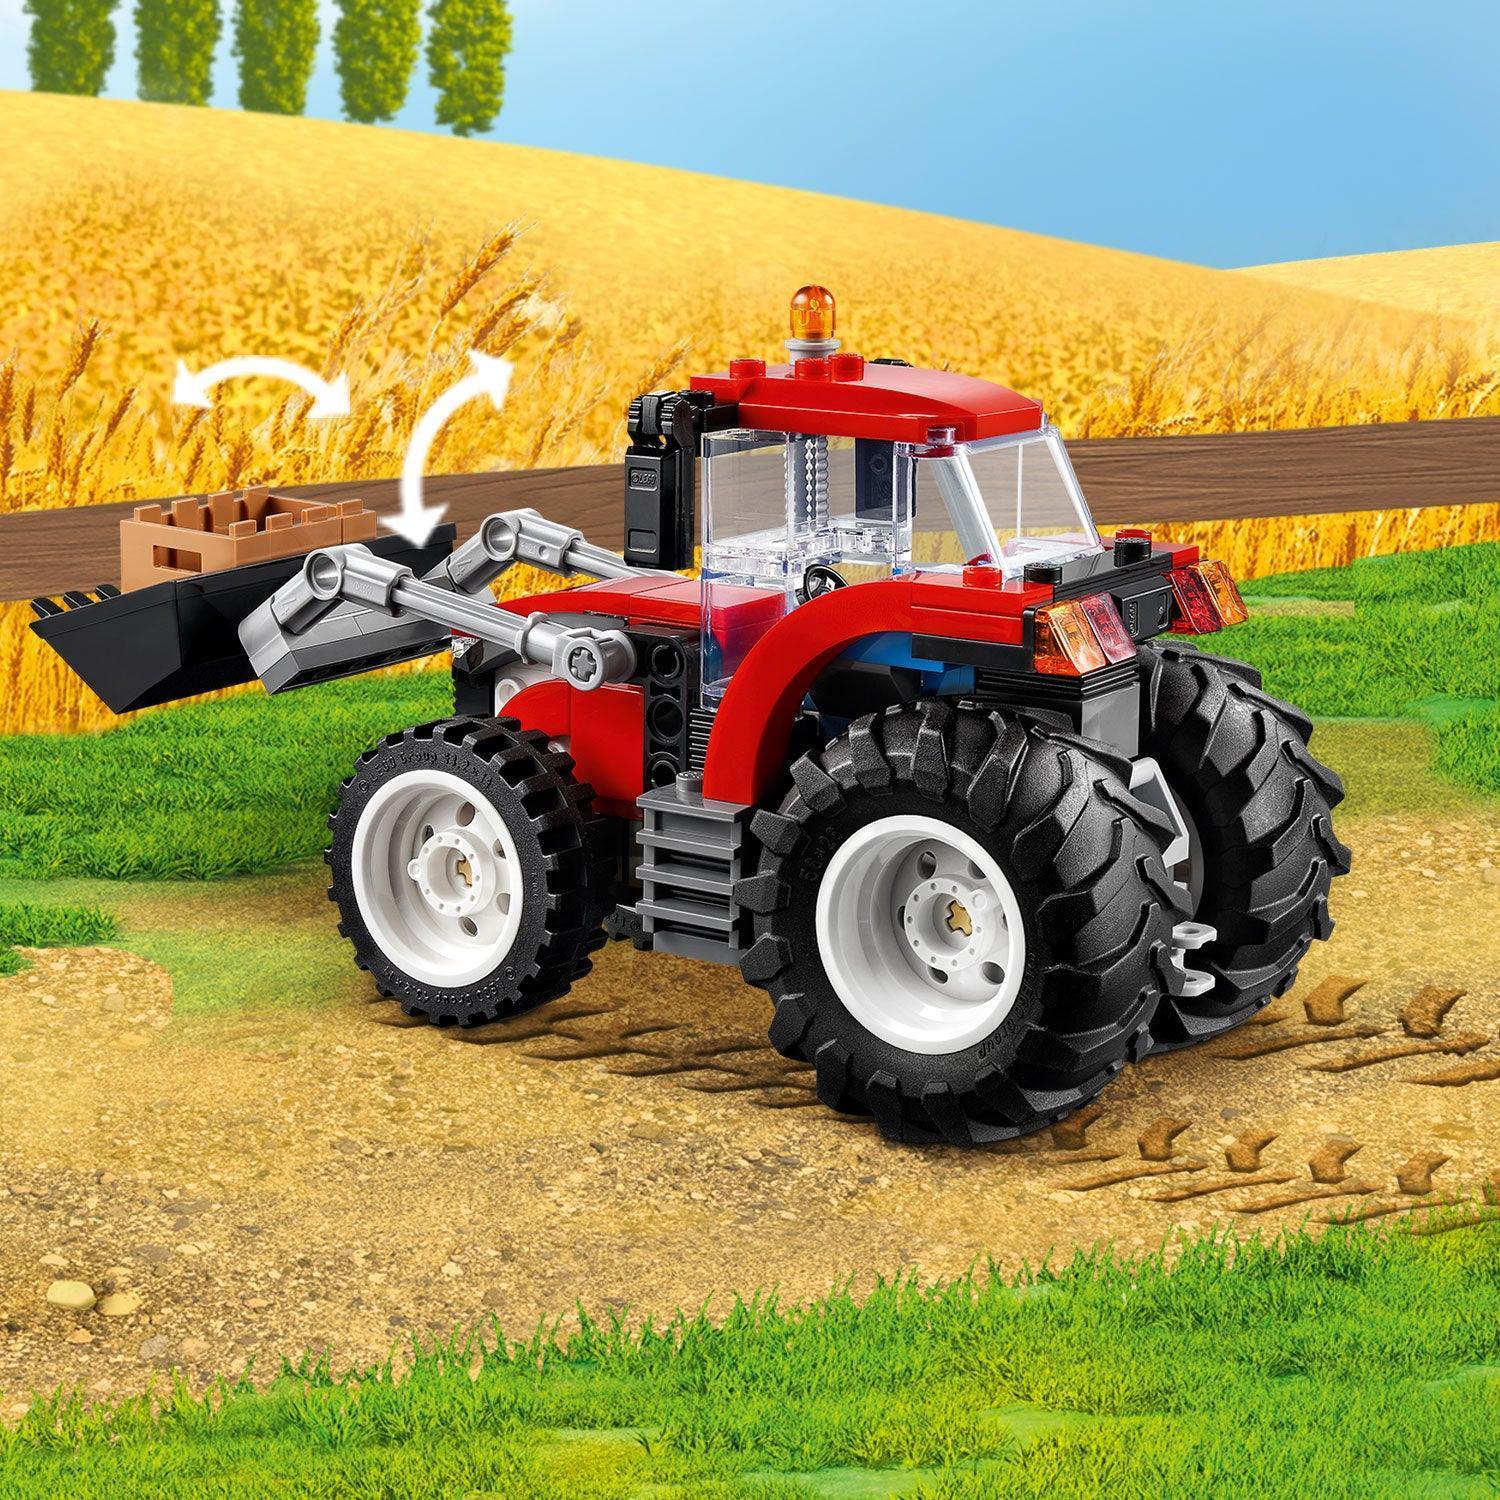 LEGO Tractor with farmer 60287 City LEGO GEWELDIGE VOERTUIGEN @ 2TTOYS LEGO €. 19.99